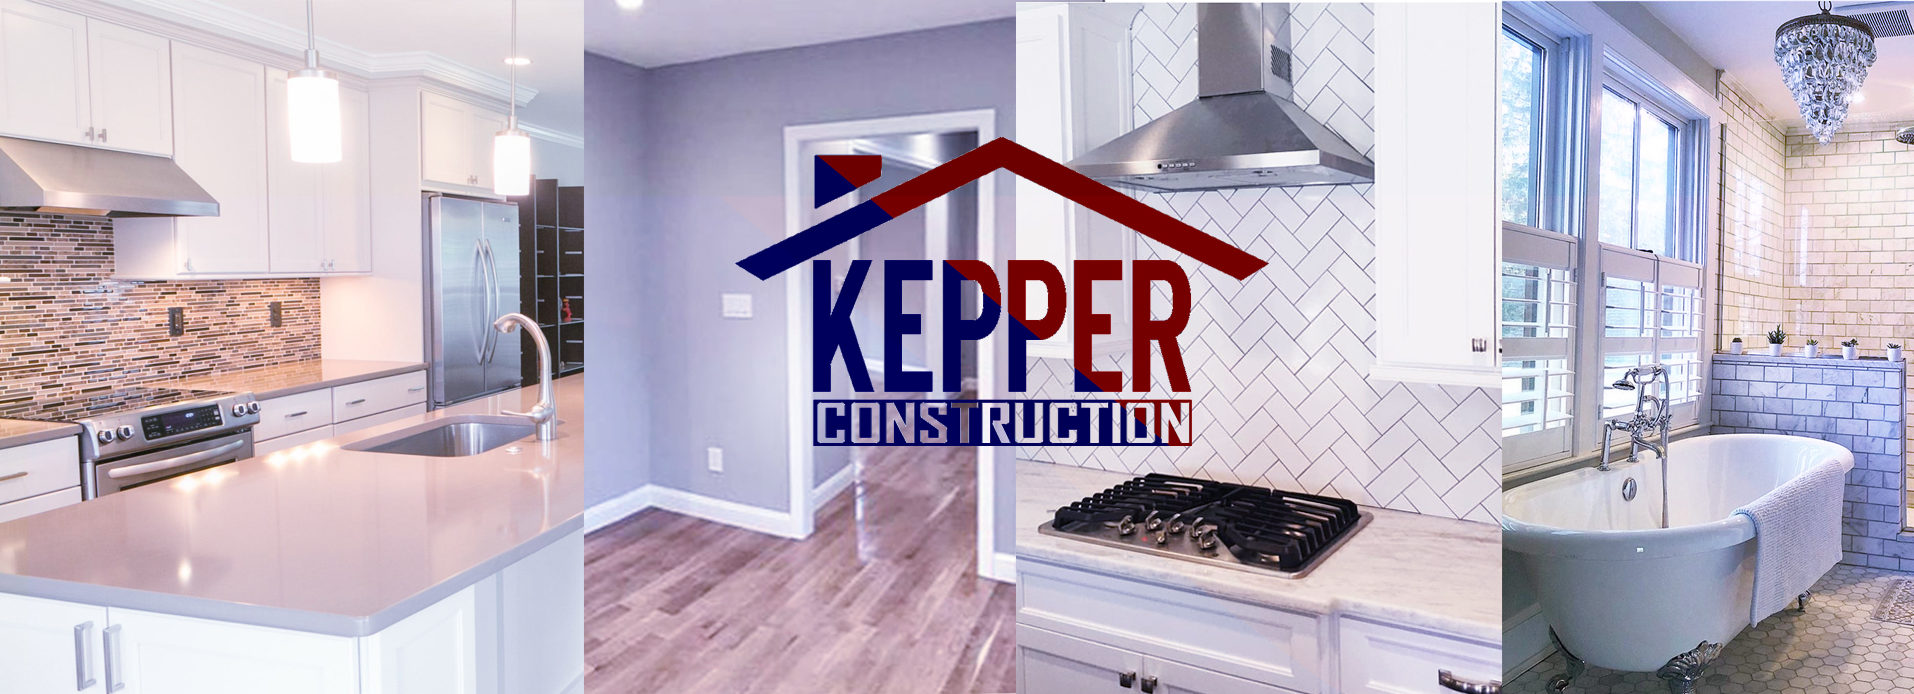 Kepper Construction